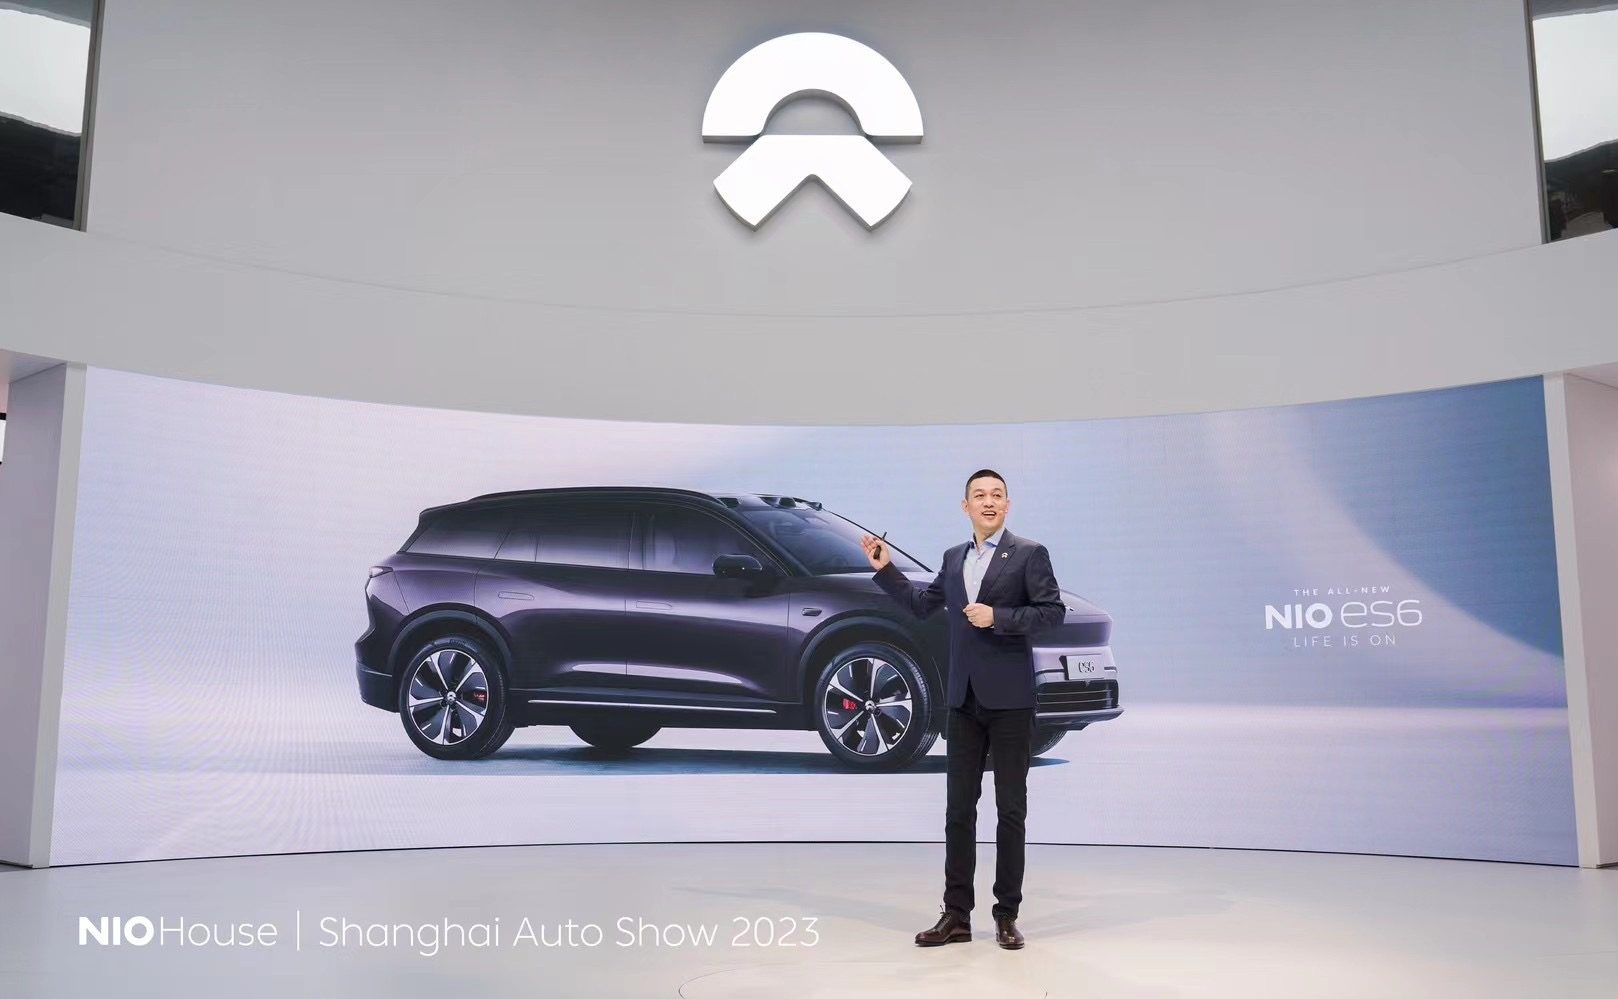 Mobility new energy vehicles electric vehicles EV auto shanghai 2023 EVs nio es6